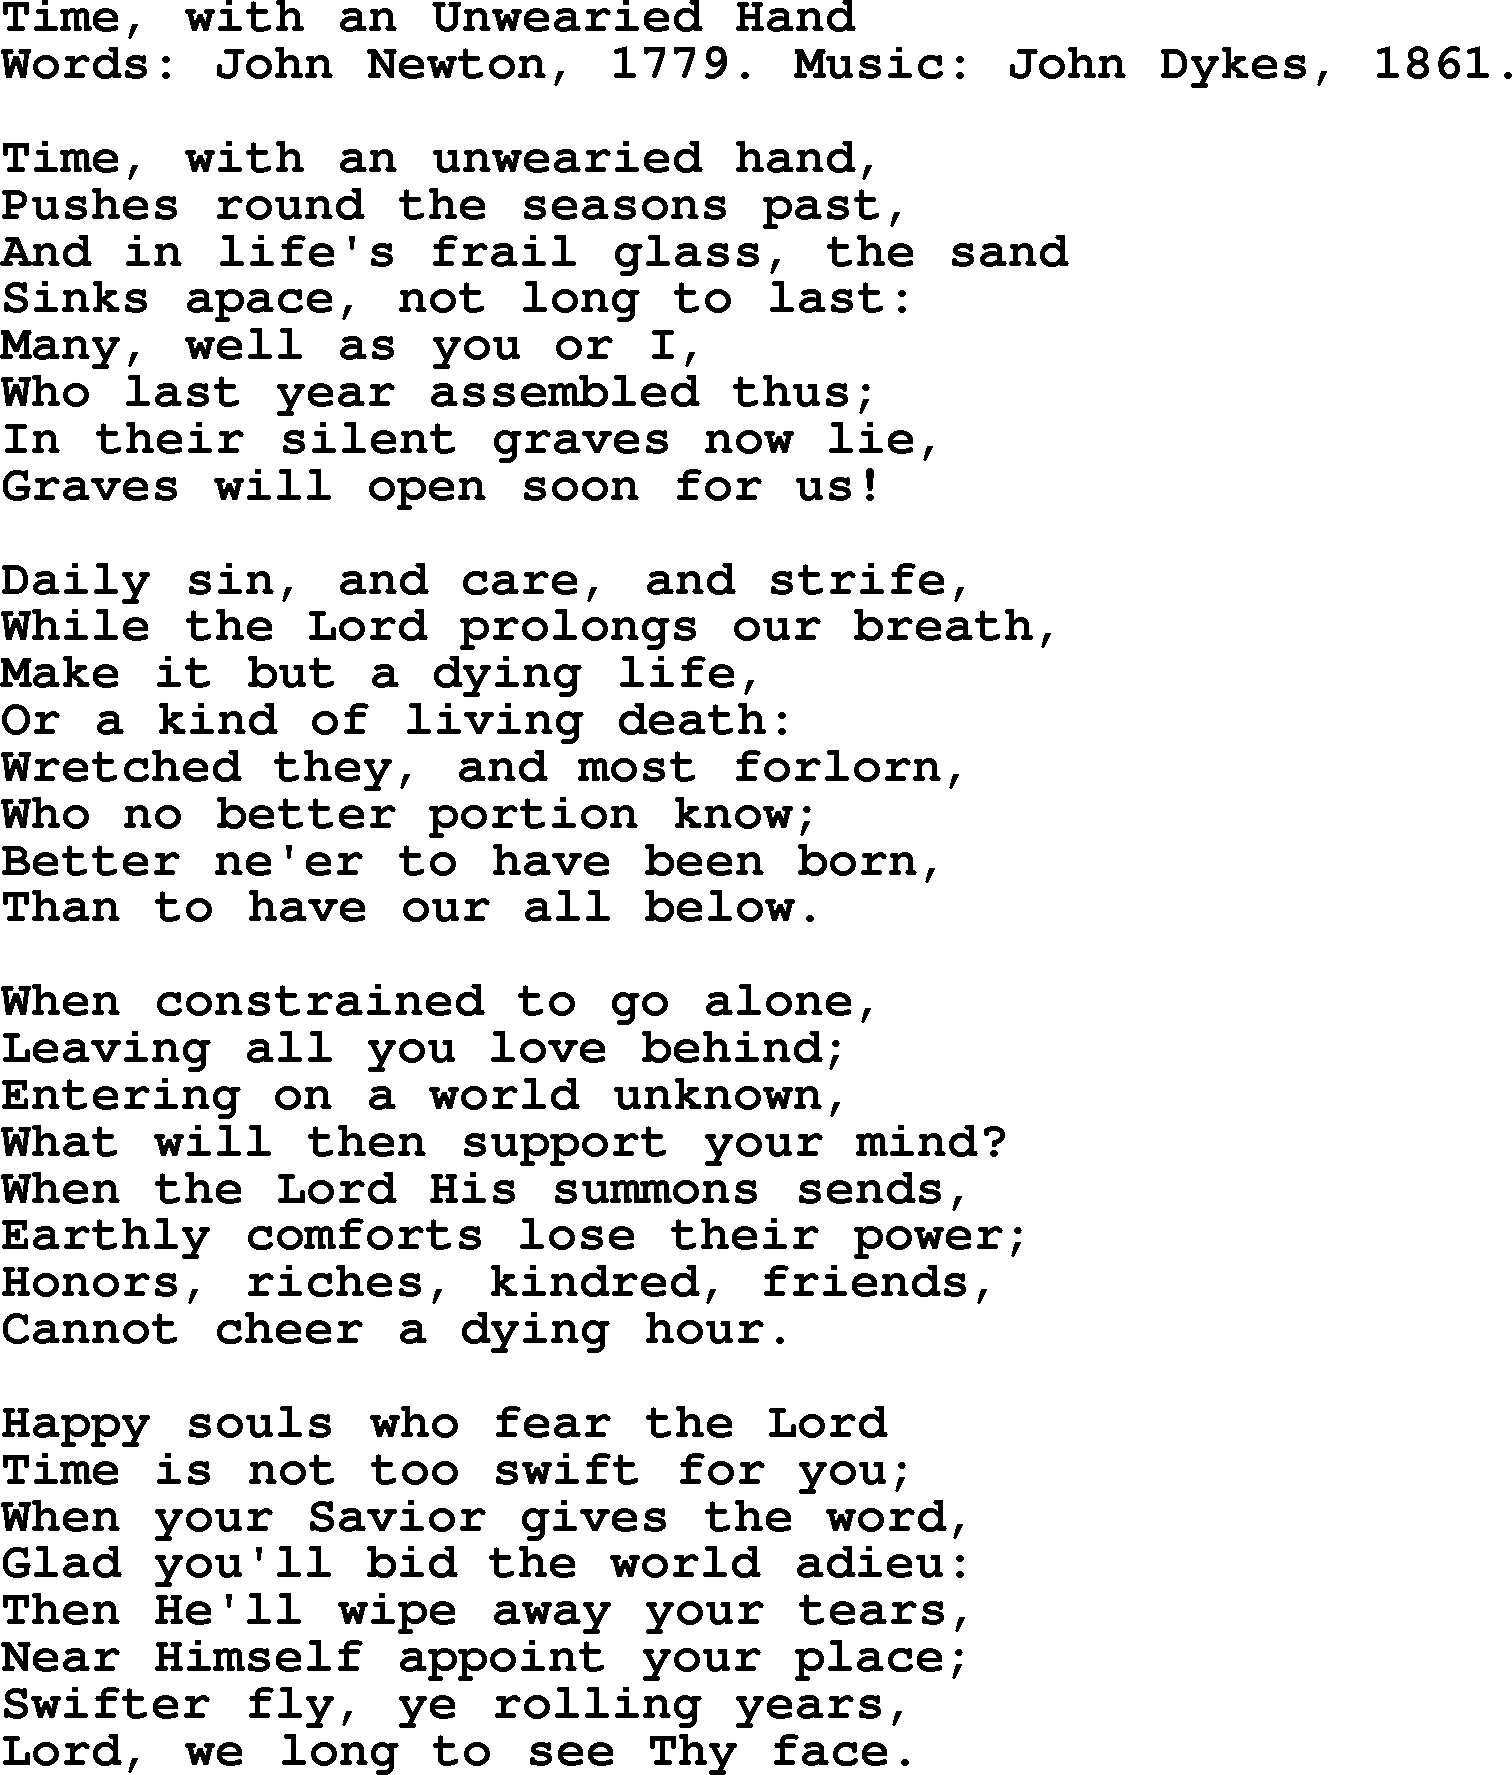 John Newton hymn: Time, With An Unwearied Hand, lyrics